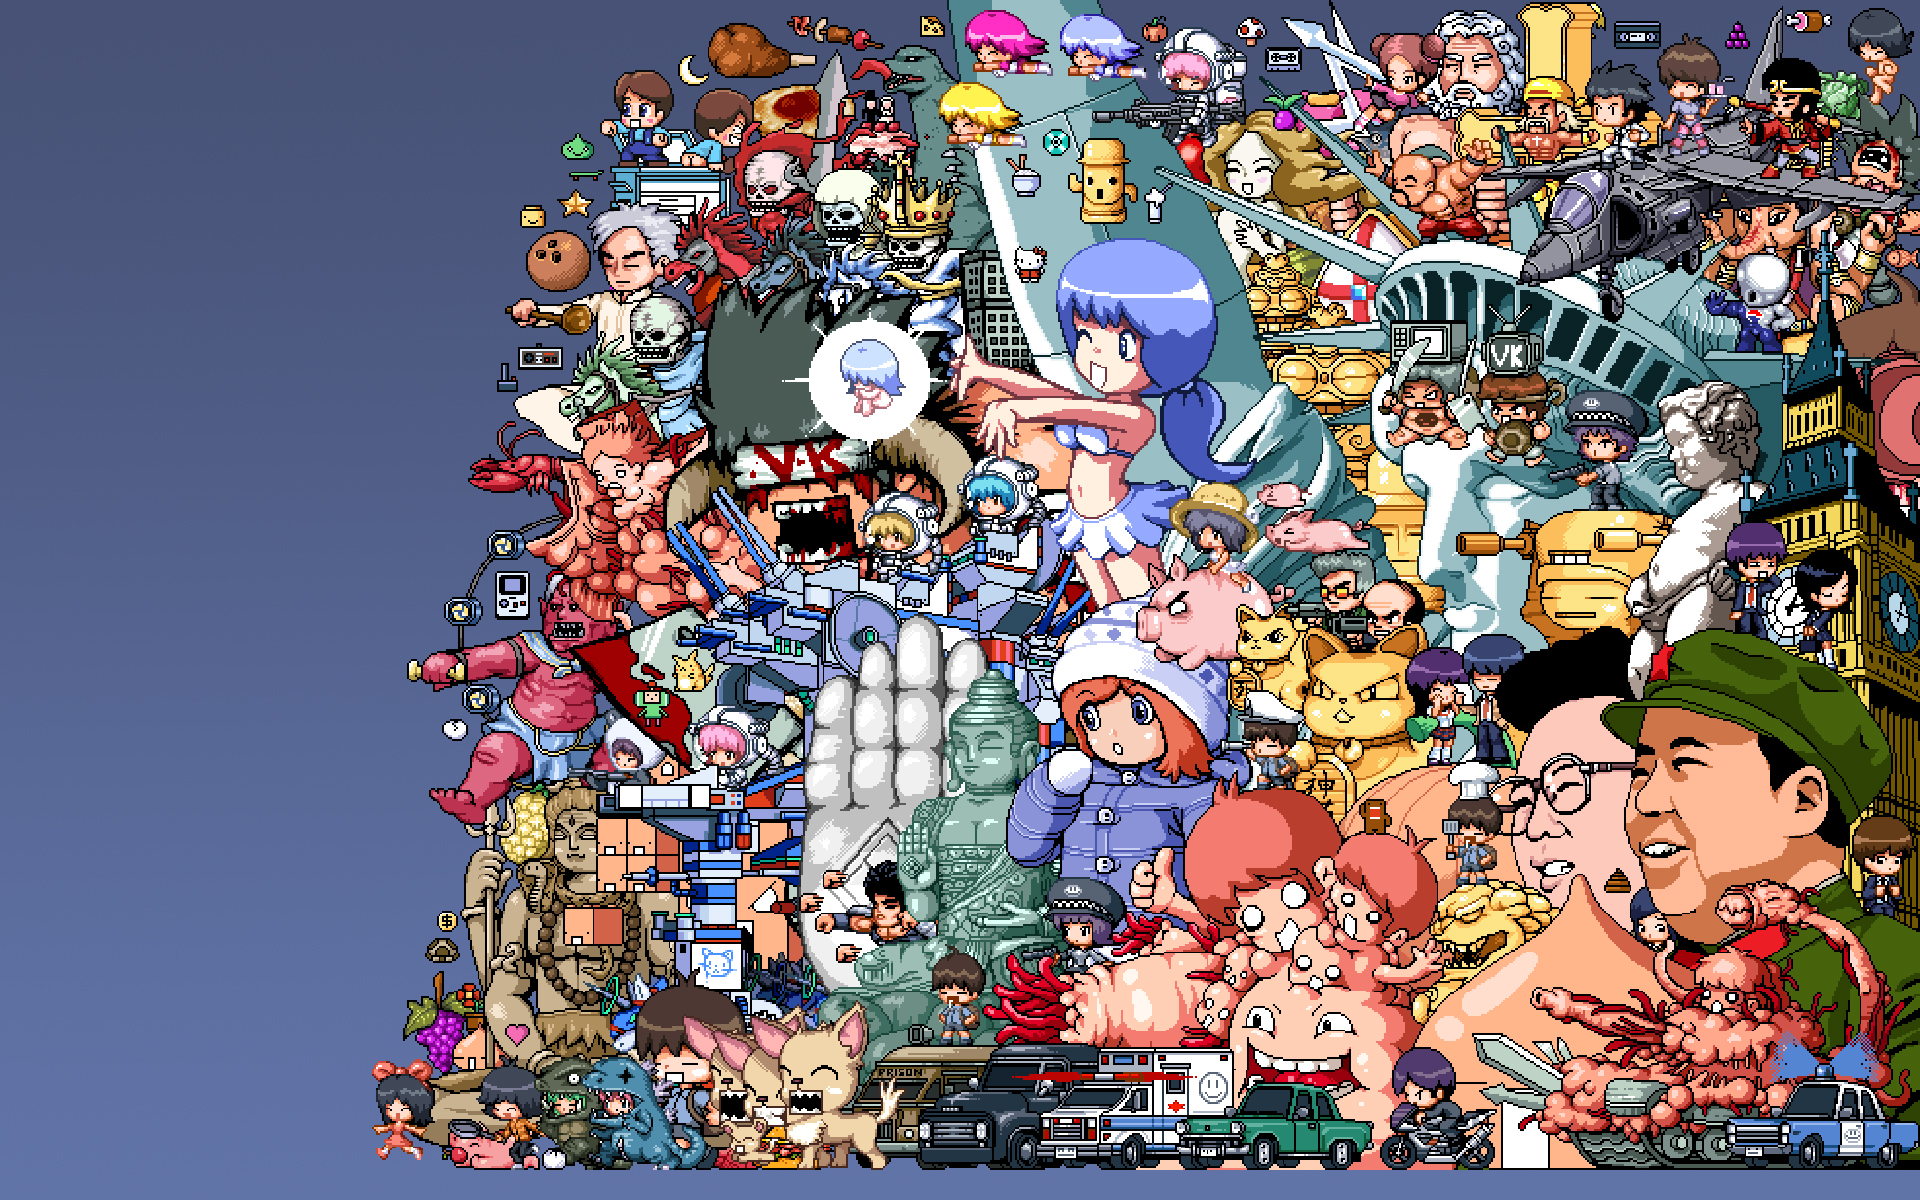 Colorful pixel art desktop wallpaper by Paul Robertson